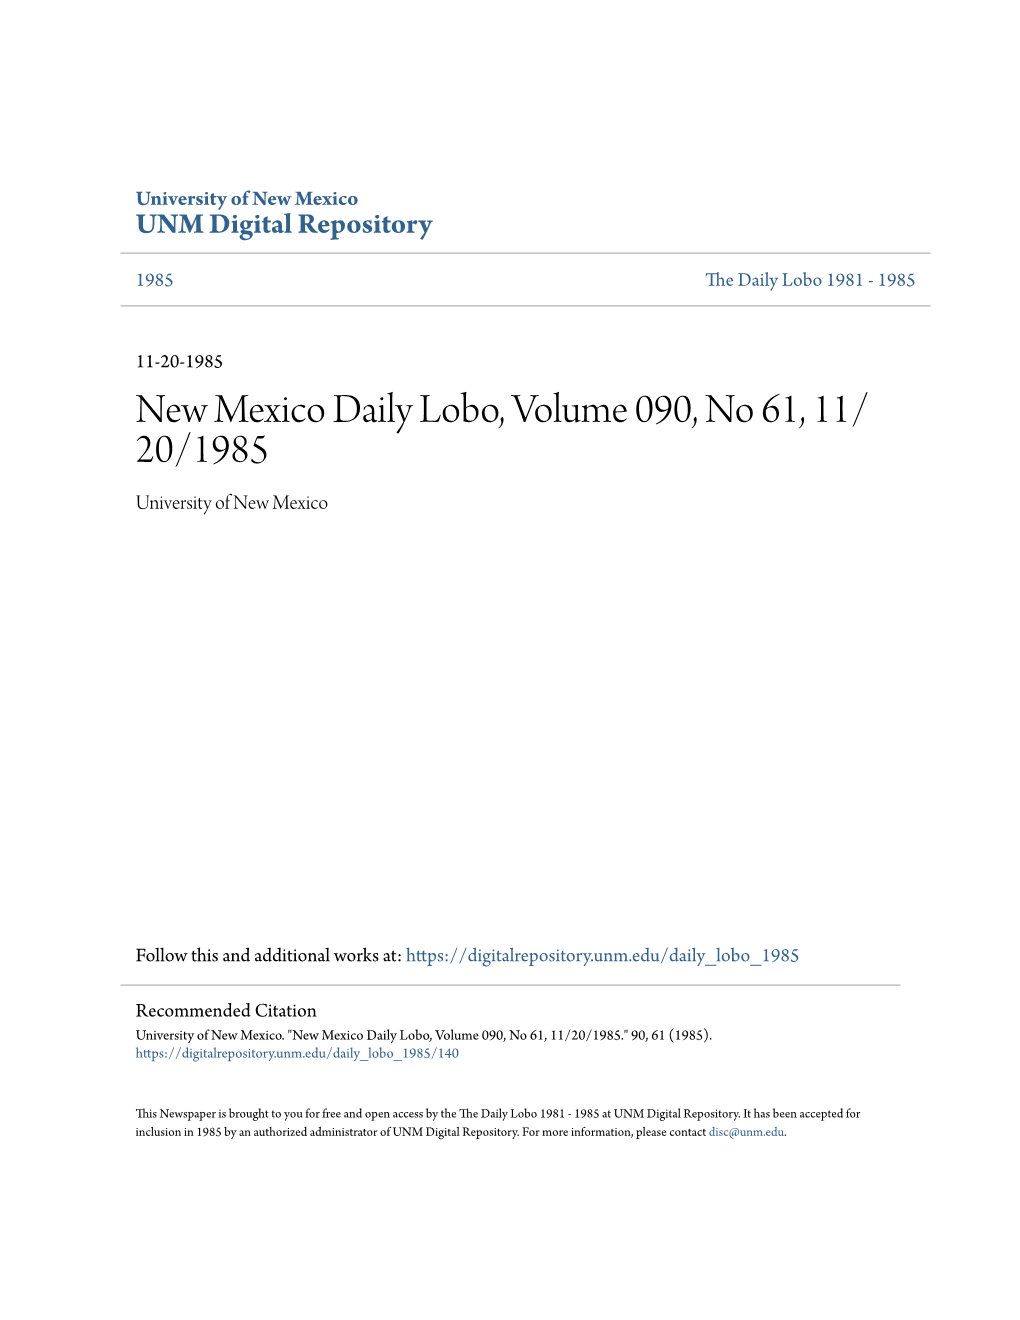 New Mexico Daily Lobo, Volume 090, No 61, 11/20/1985." 90, 61 (1985)